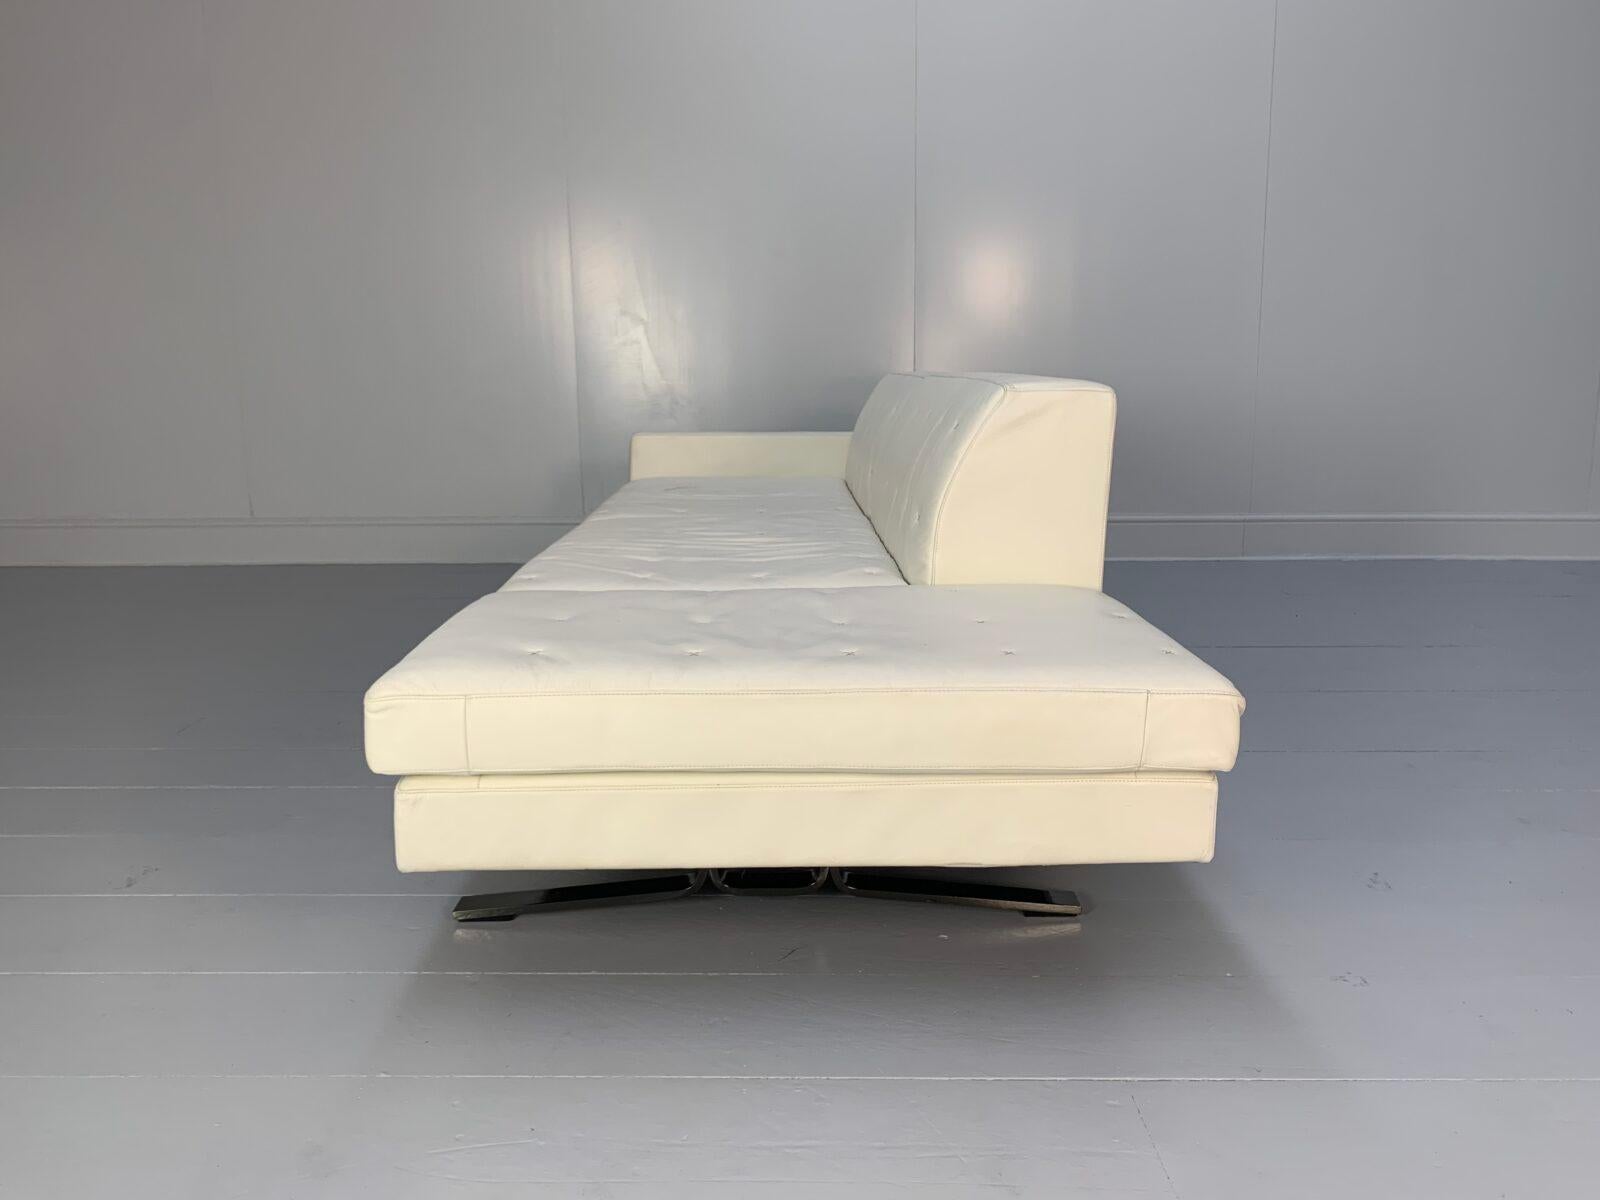 Poltrona Frau “Kennedee” 3-Seat Sofa – In Ivory “Pelle Frau” Leather In Good Condition For Sale In Barrowford, GB